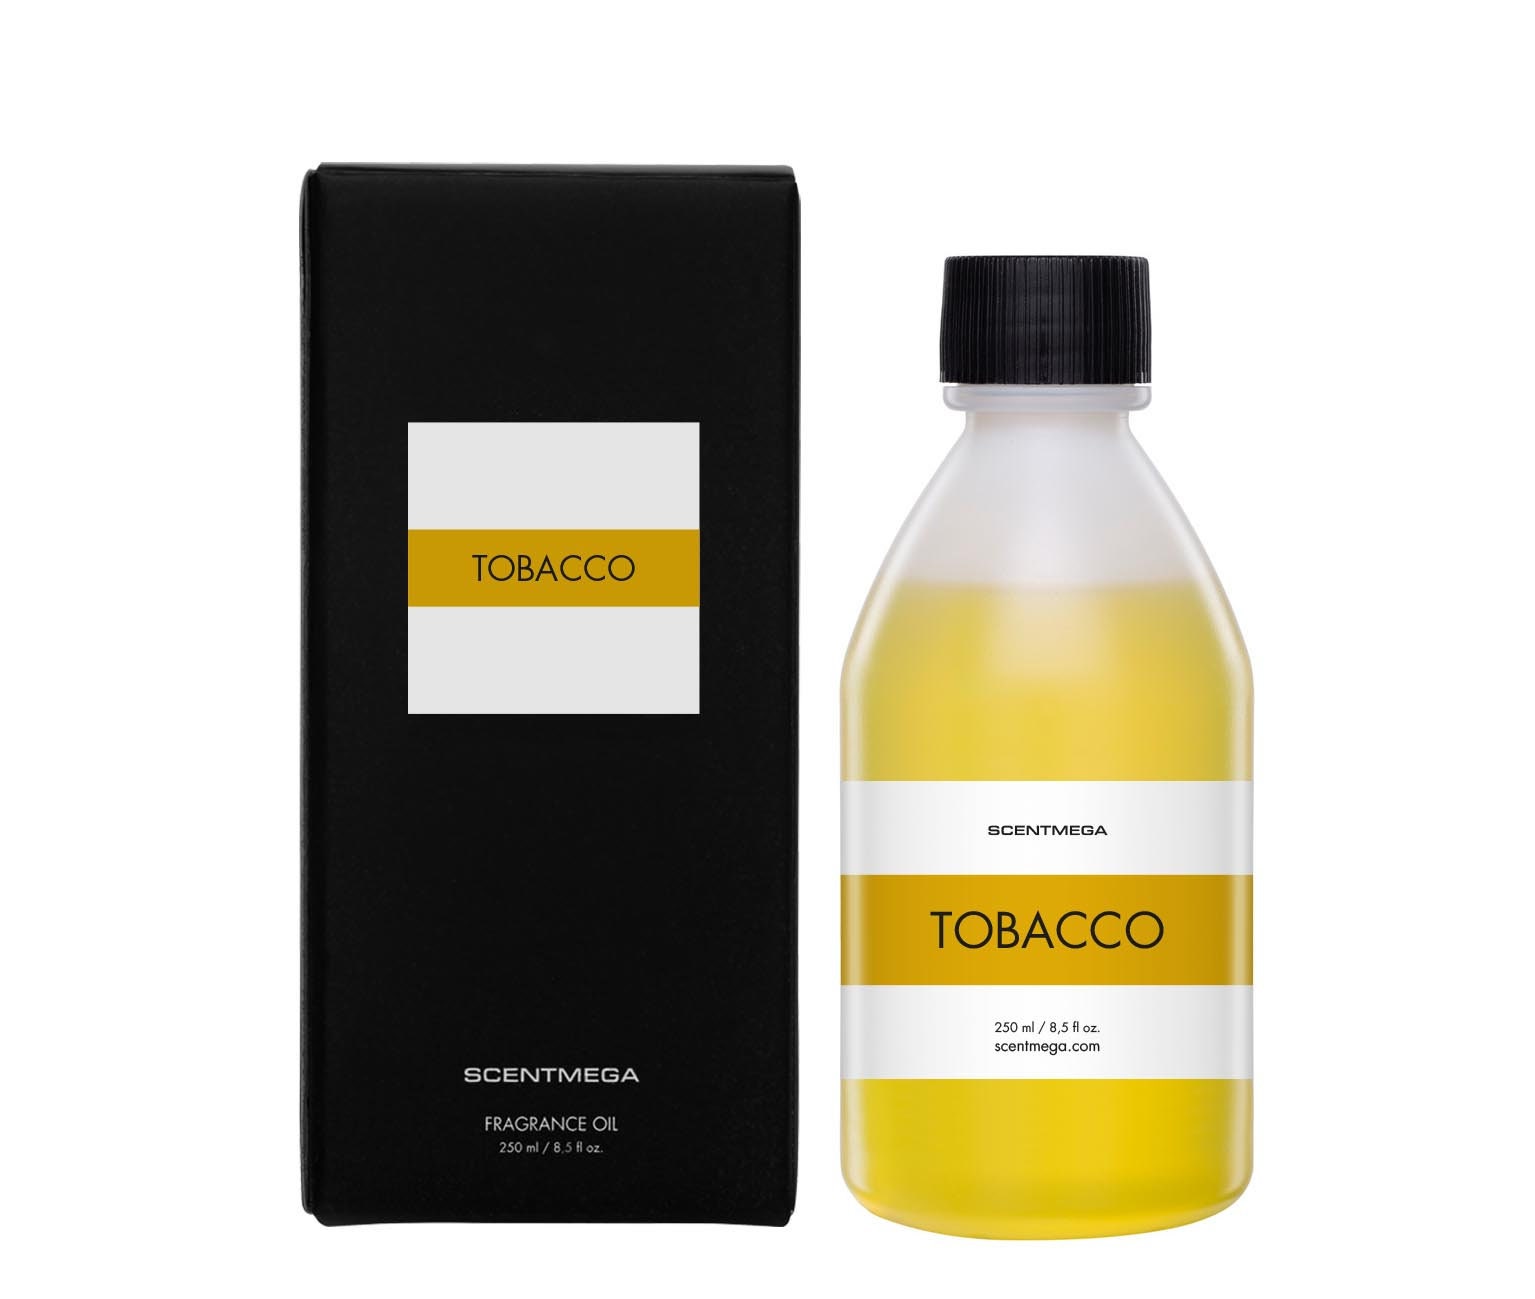 1oz Tobacco Vanilla - Ultra-Strong Fragrance Oil